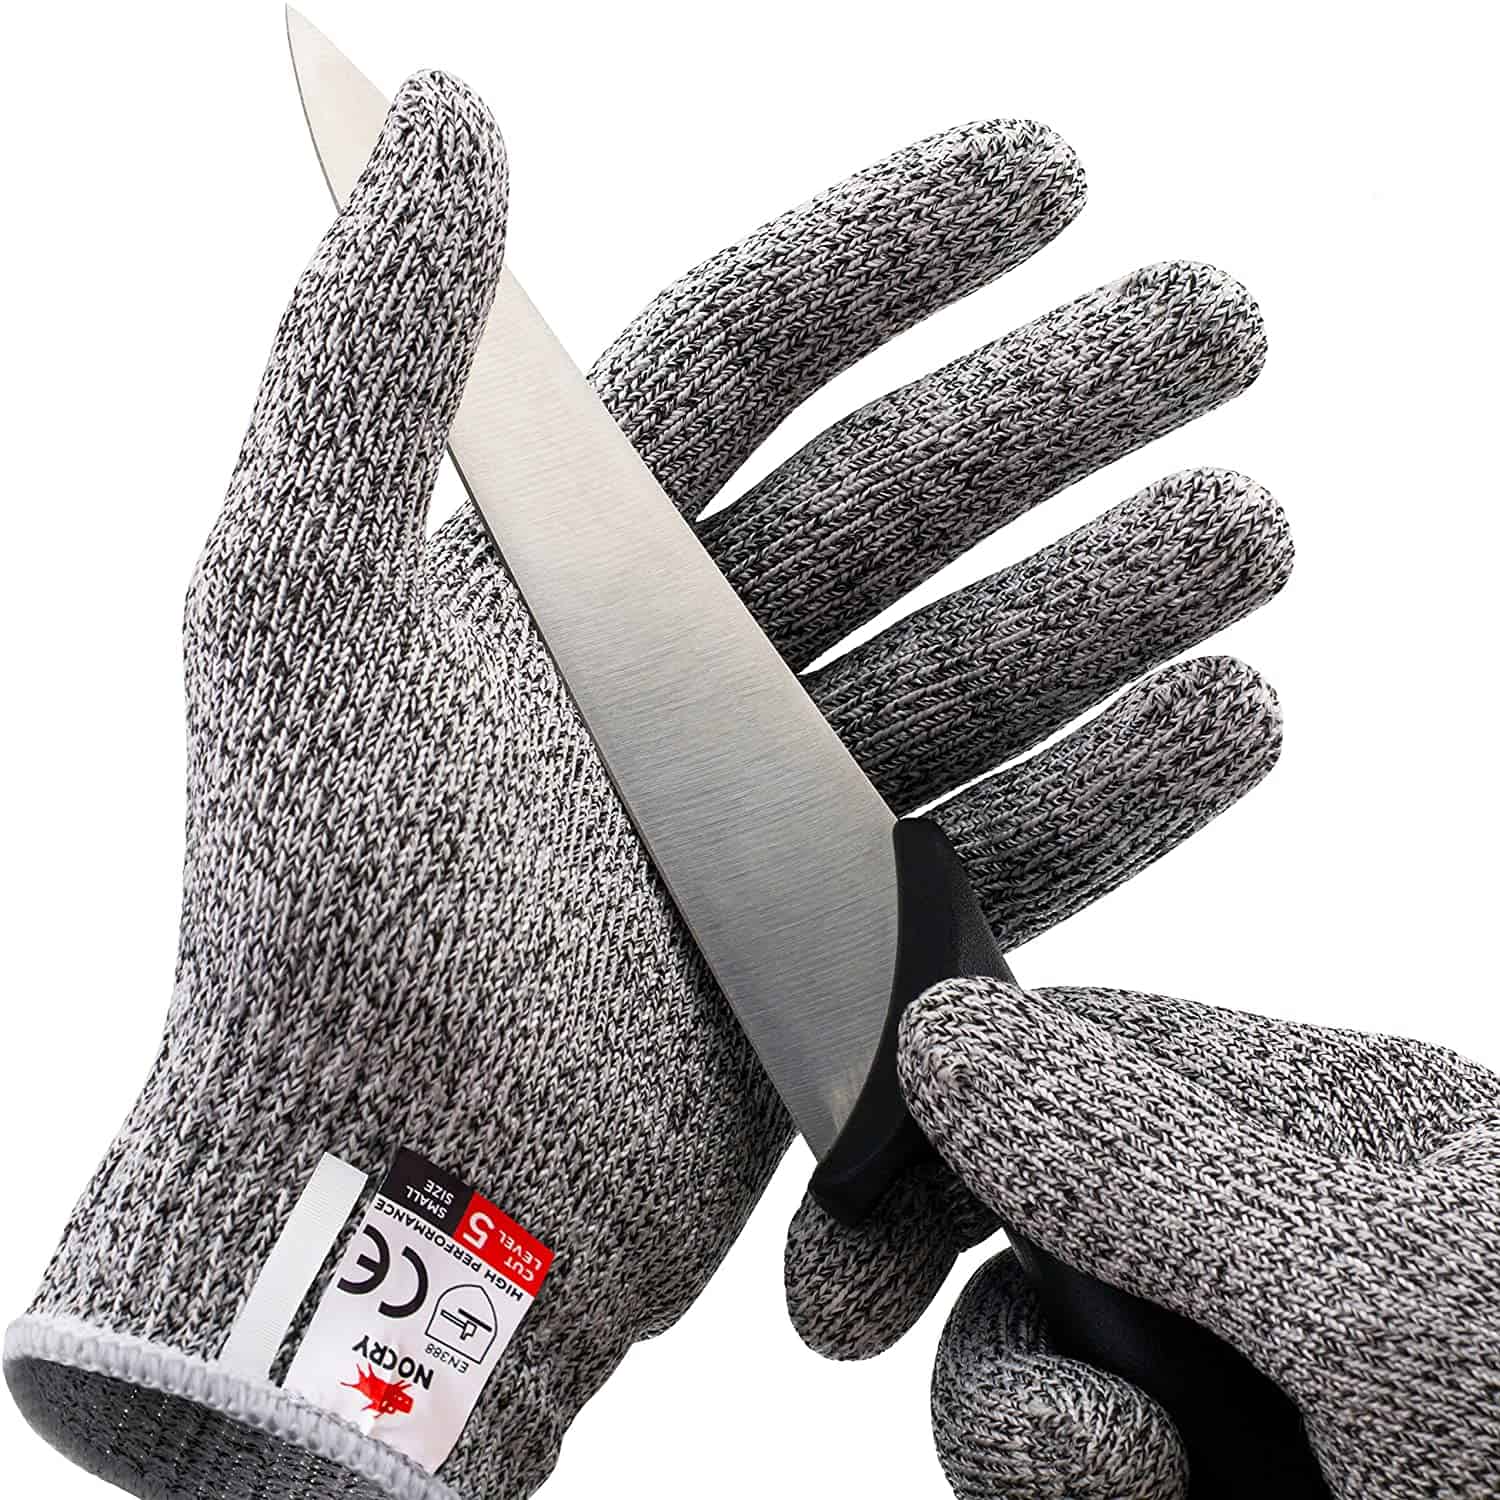 mejores guantes resistentes a cortes